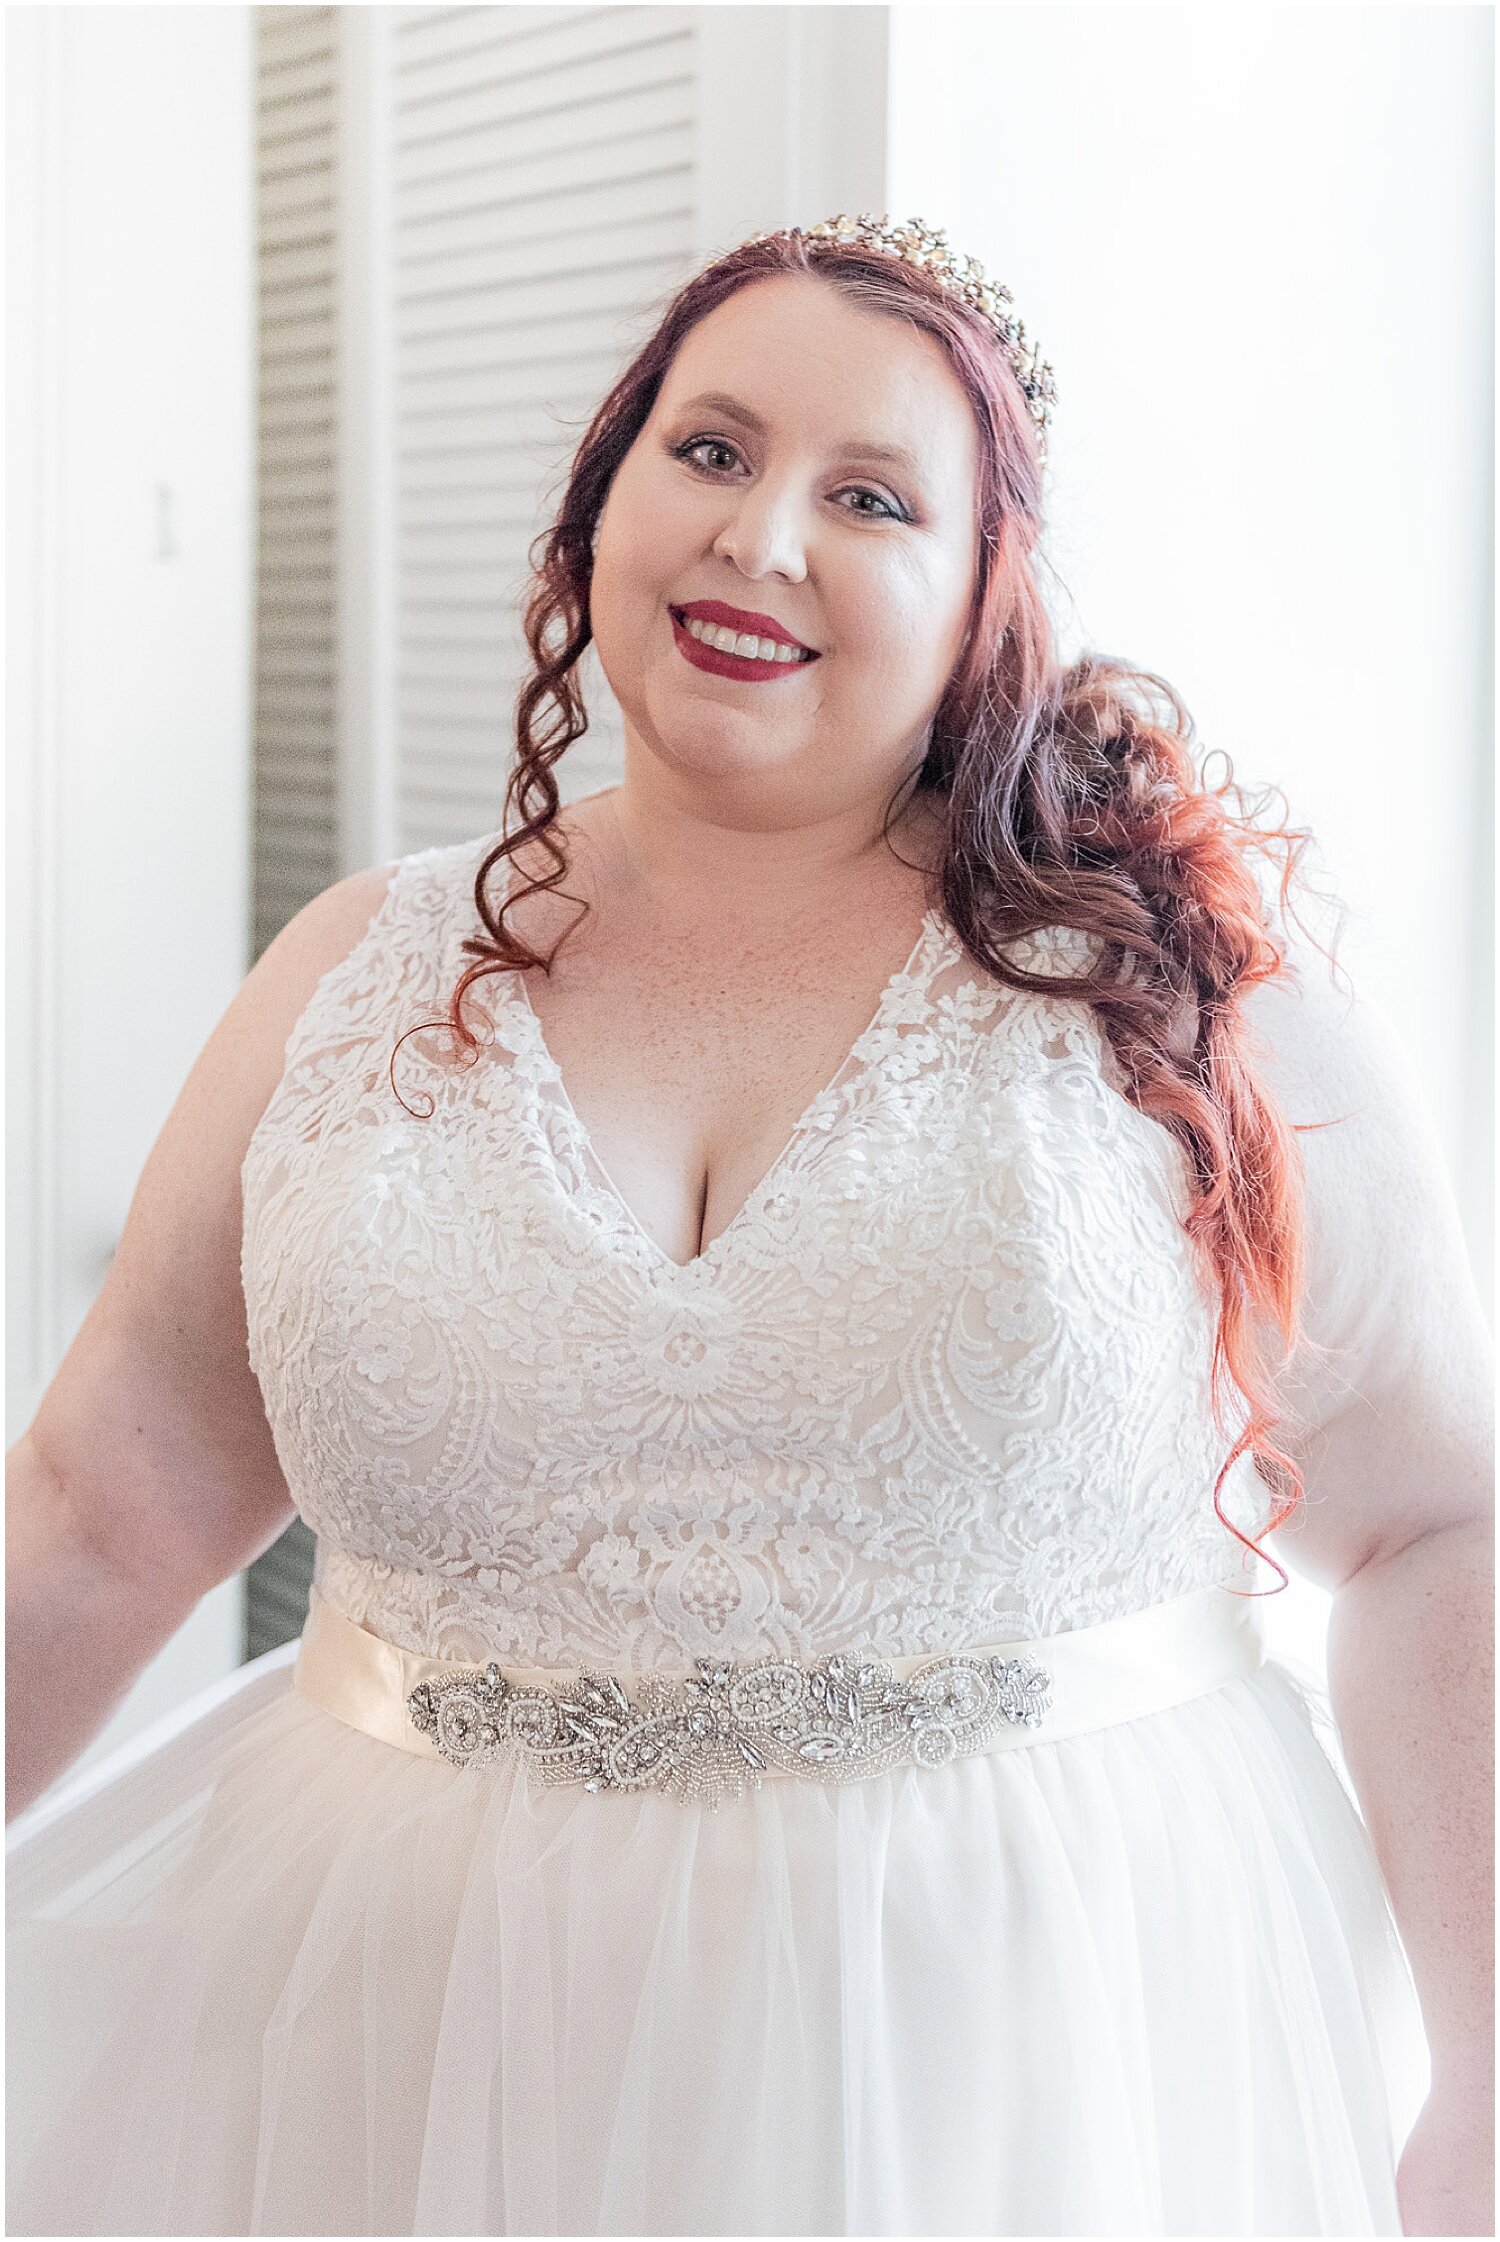  bride portrait at her Jacksonville wedding 